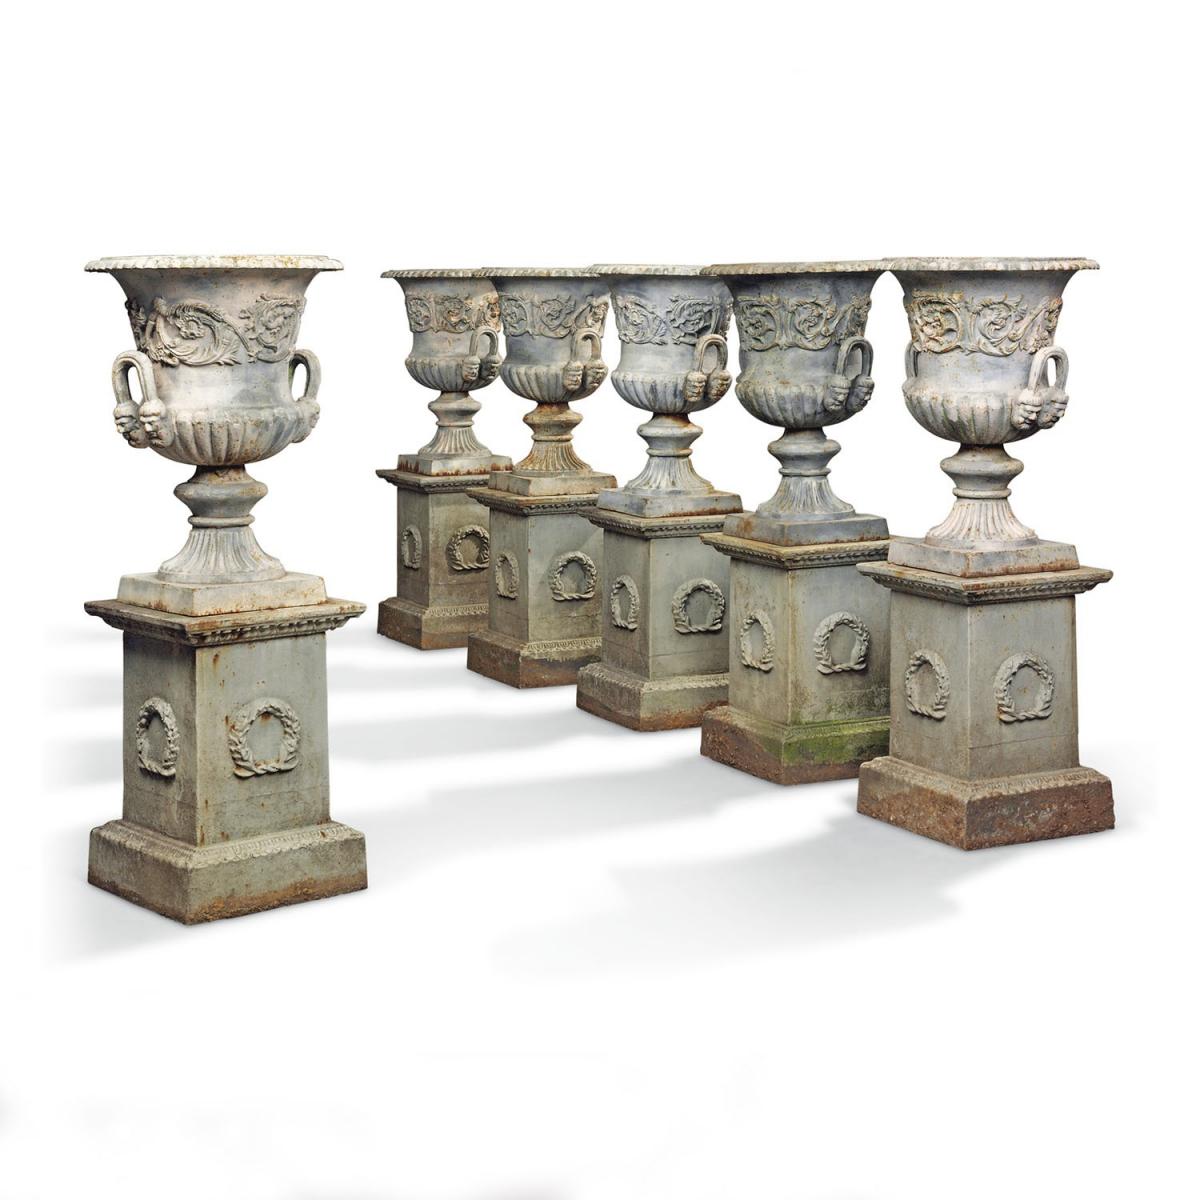 ten cast iron urns on pedestals